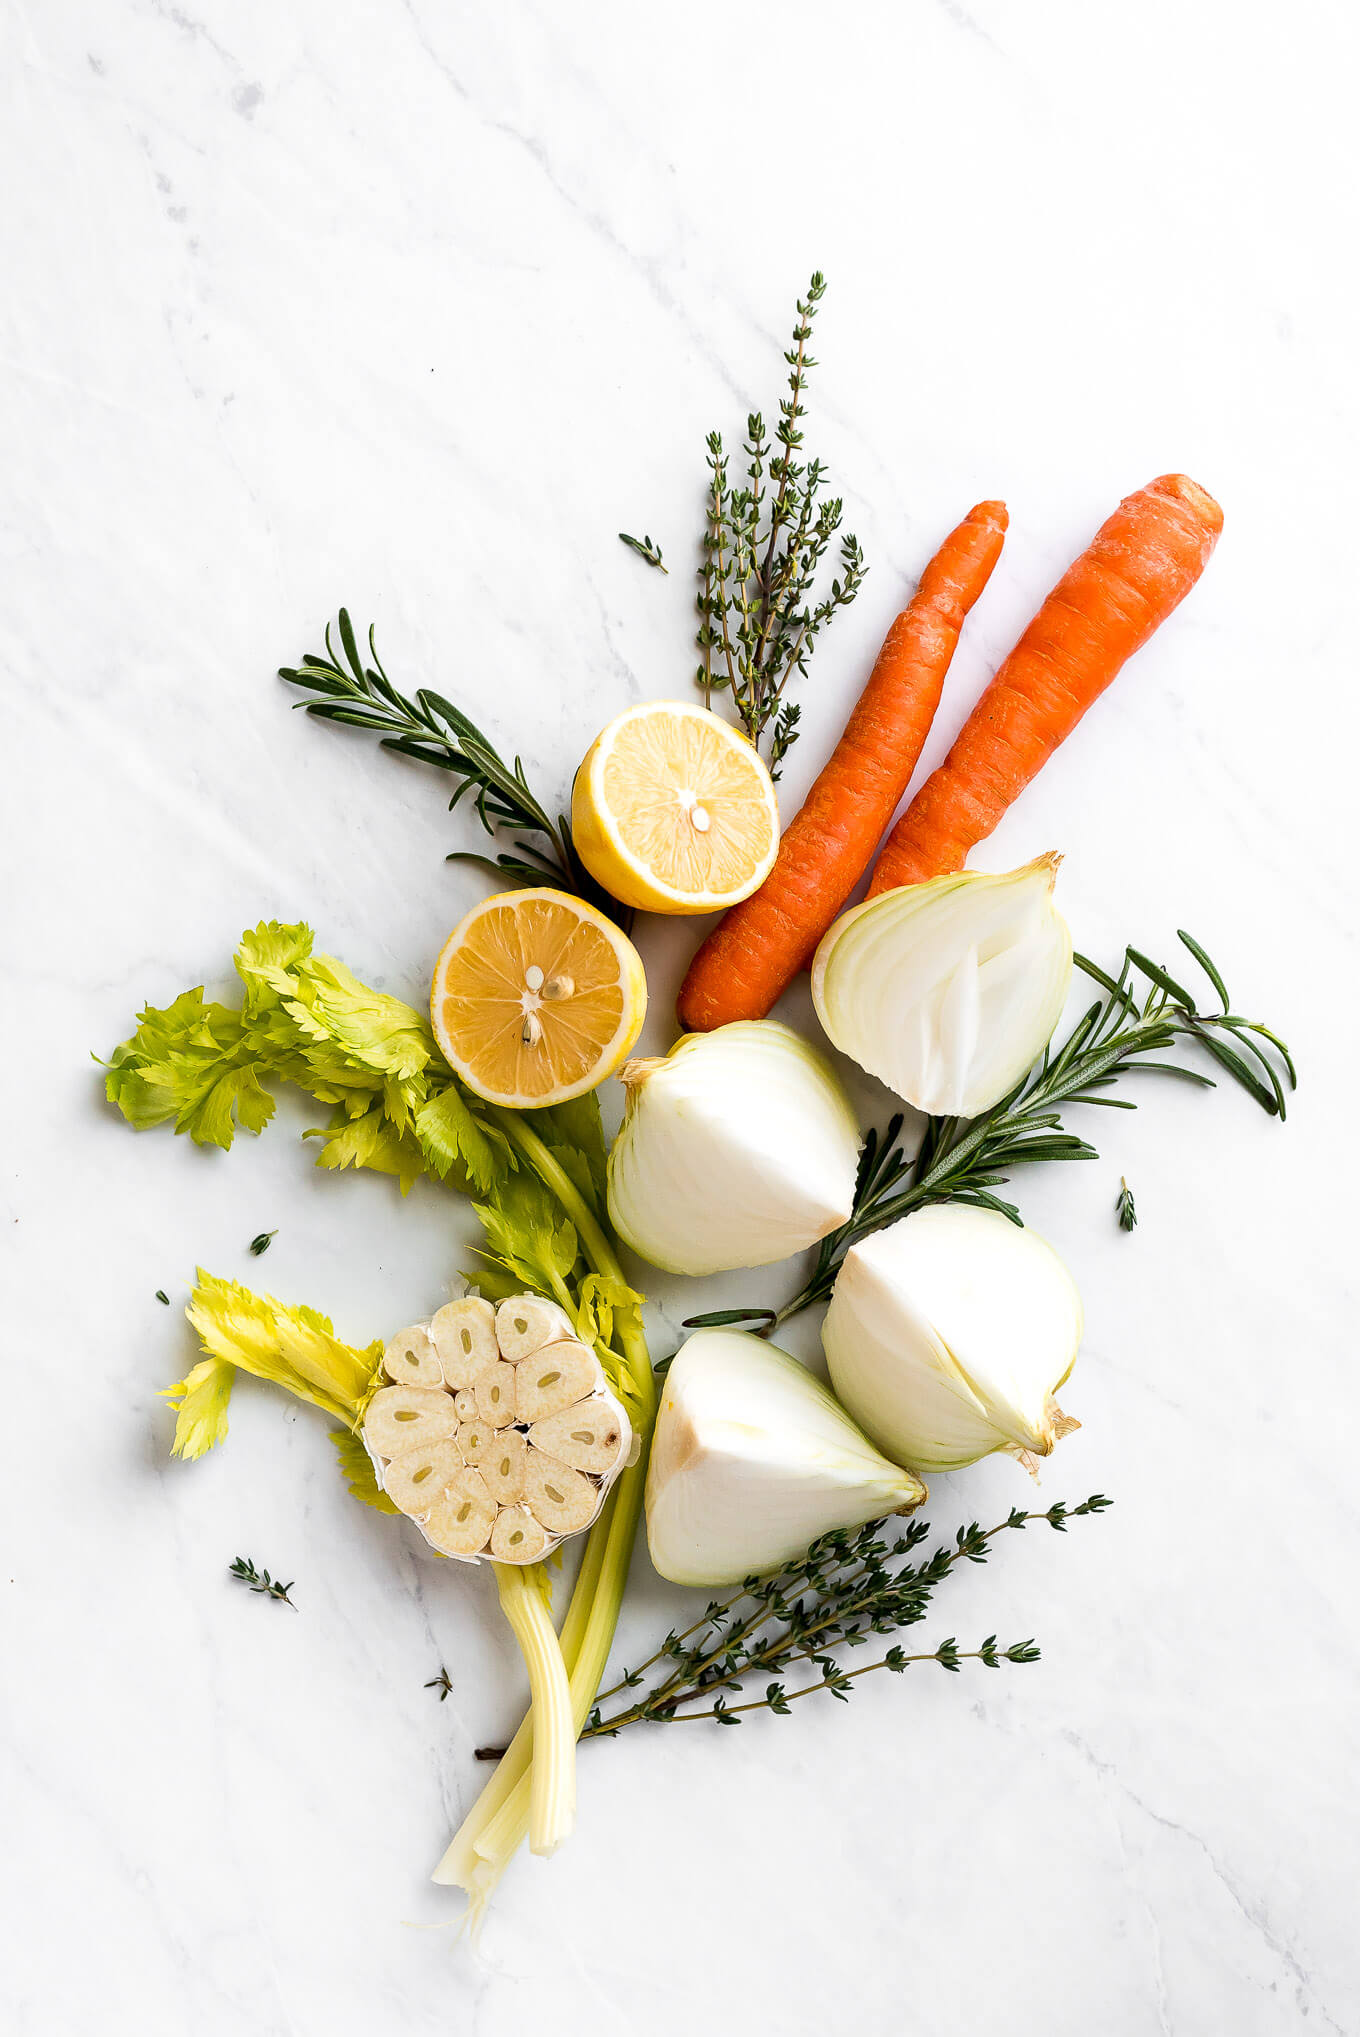 Aromatics- carrots, onion, celery, garlic, lemon, and herbs.